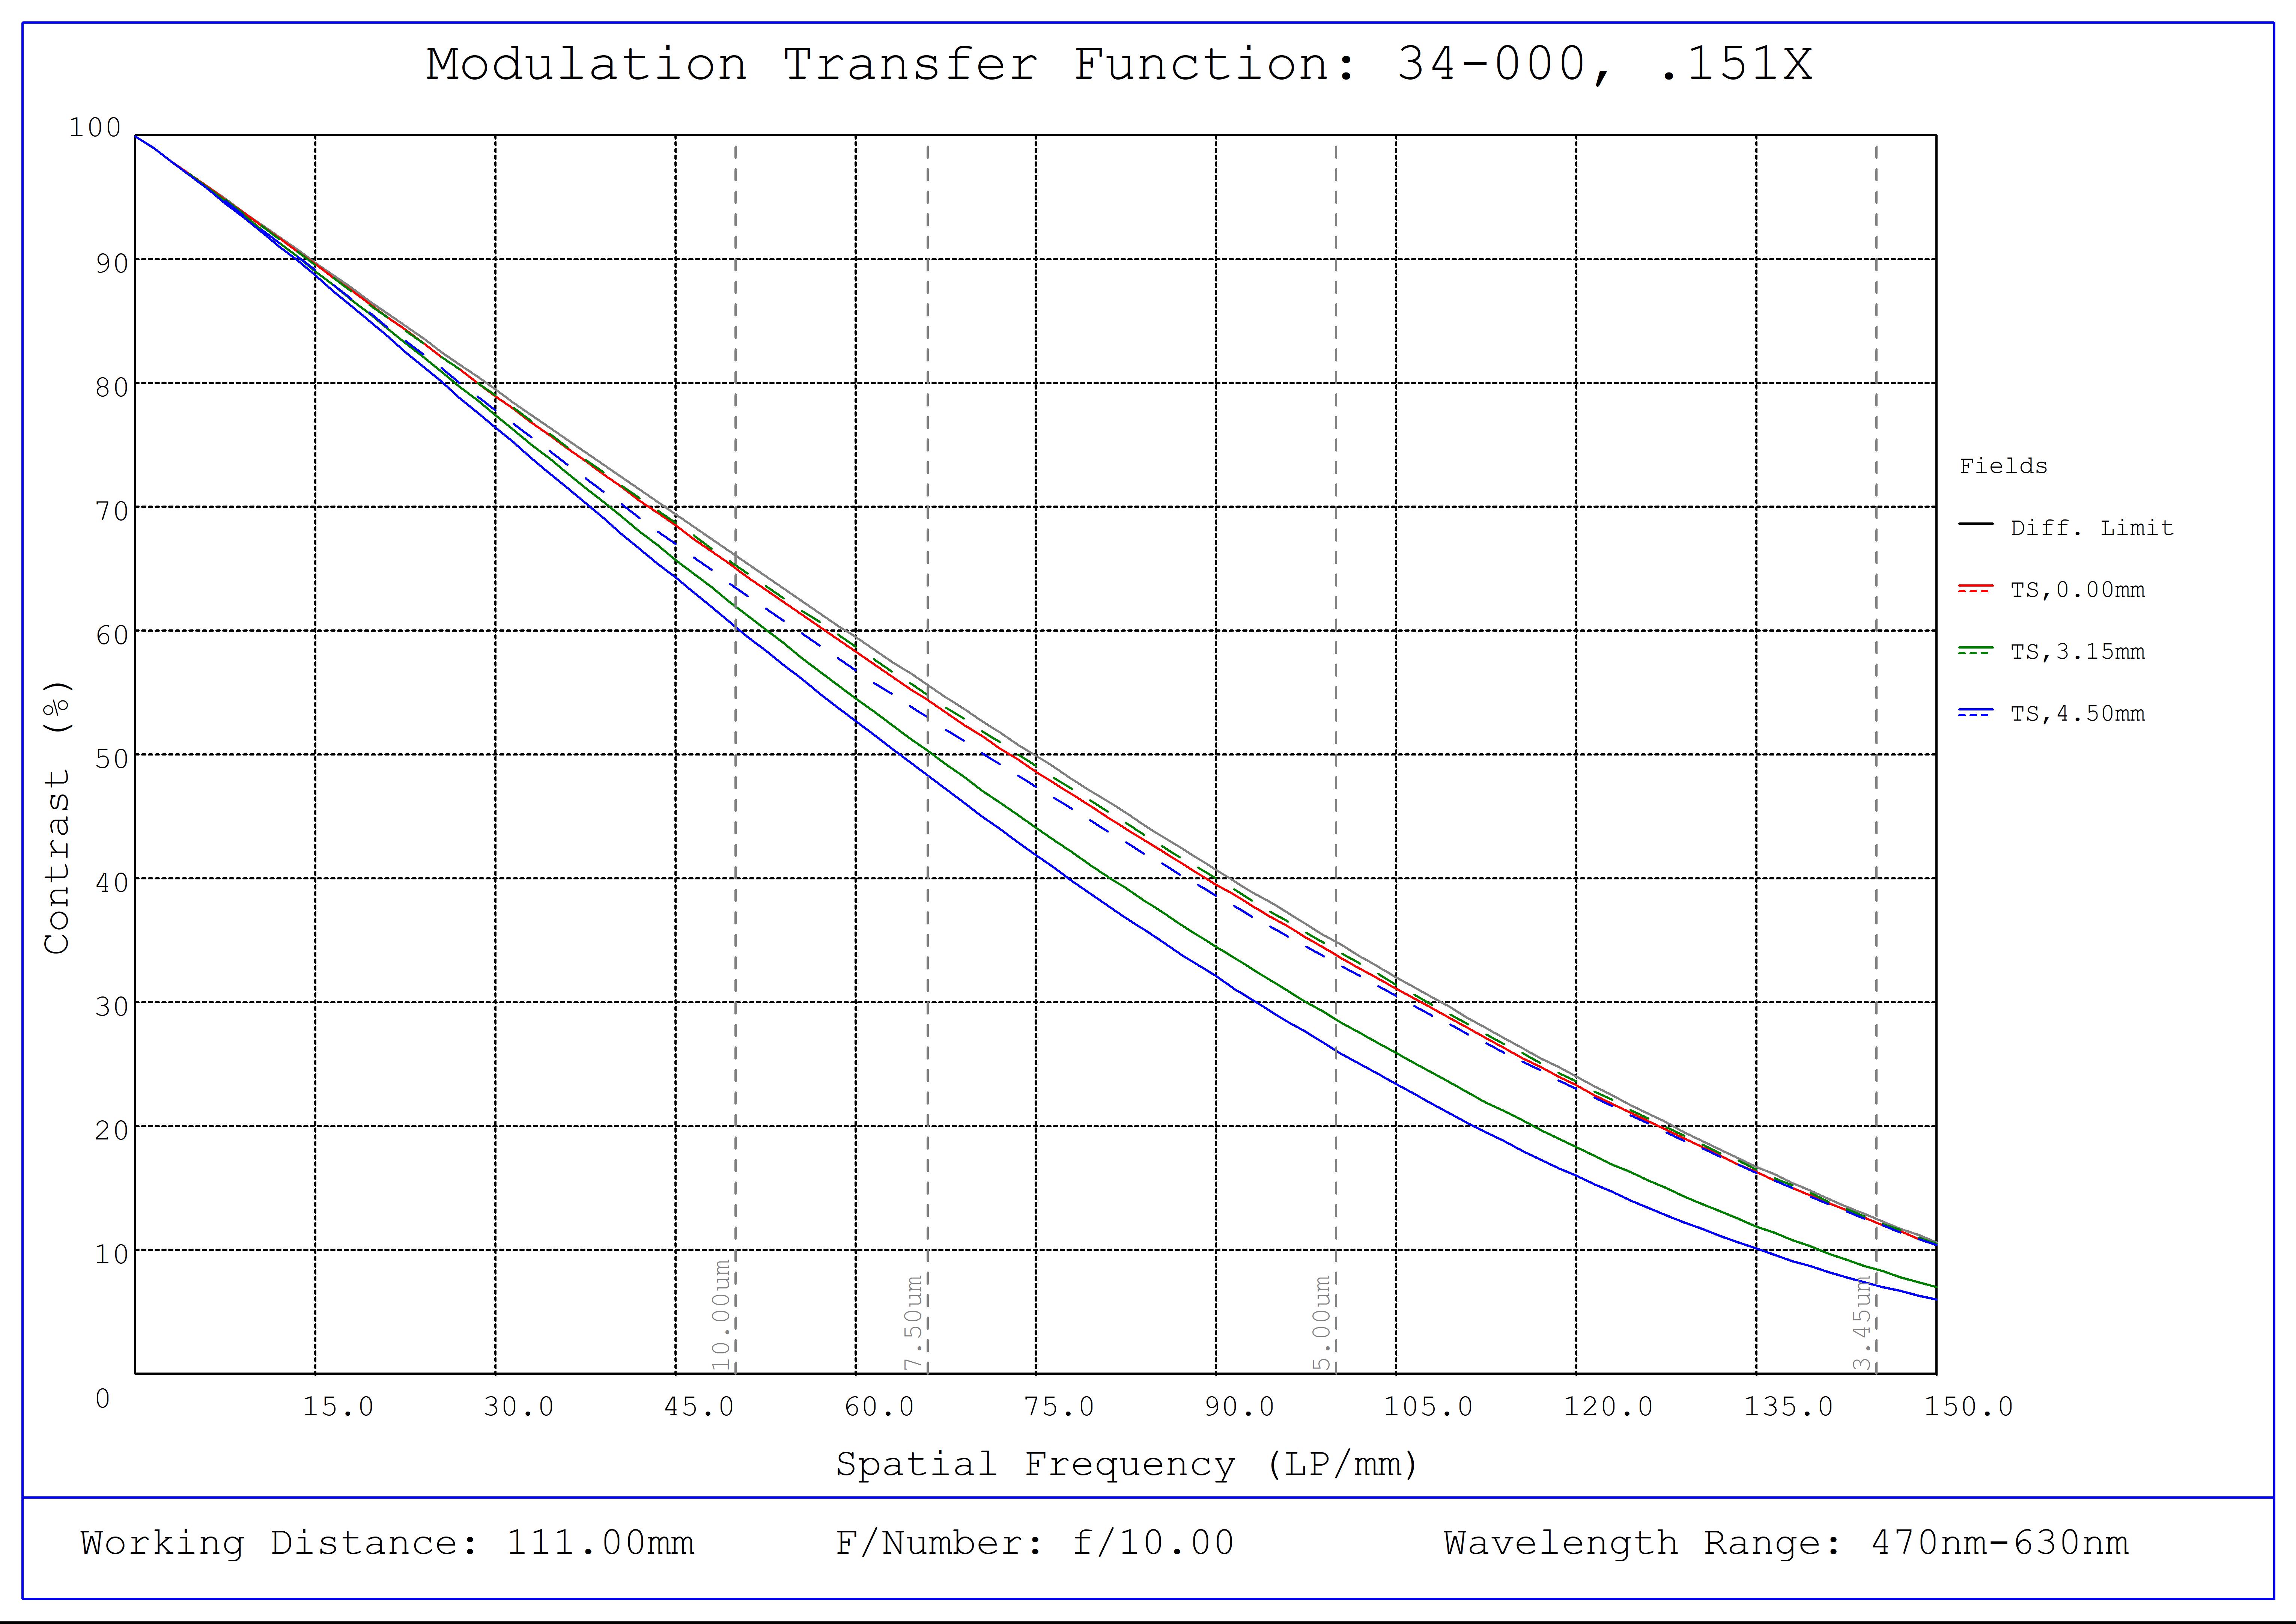 #34-000, 0.151X, 1/1.8" C-Mount TitanTL® Telecentric Lens, Modulated Transfer Function (MTF) Plot, 111mm Working Distance, f10